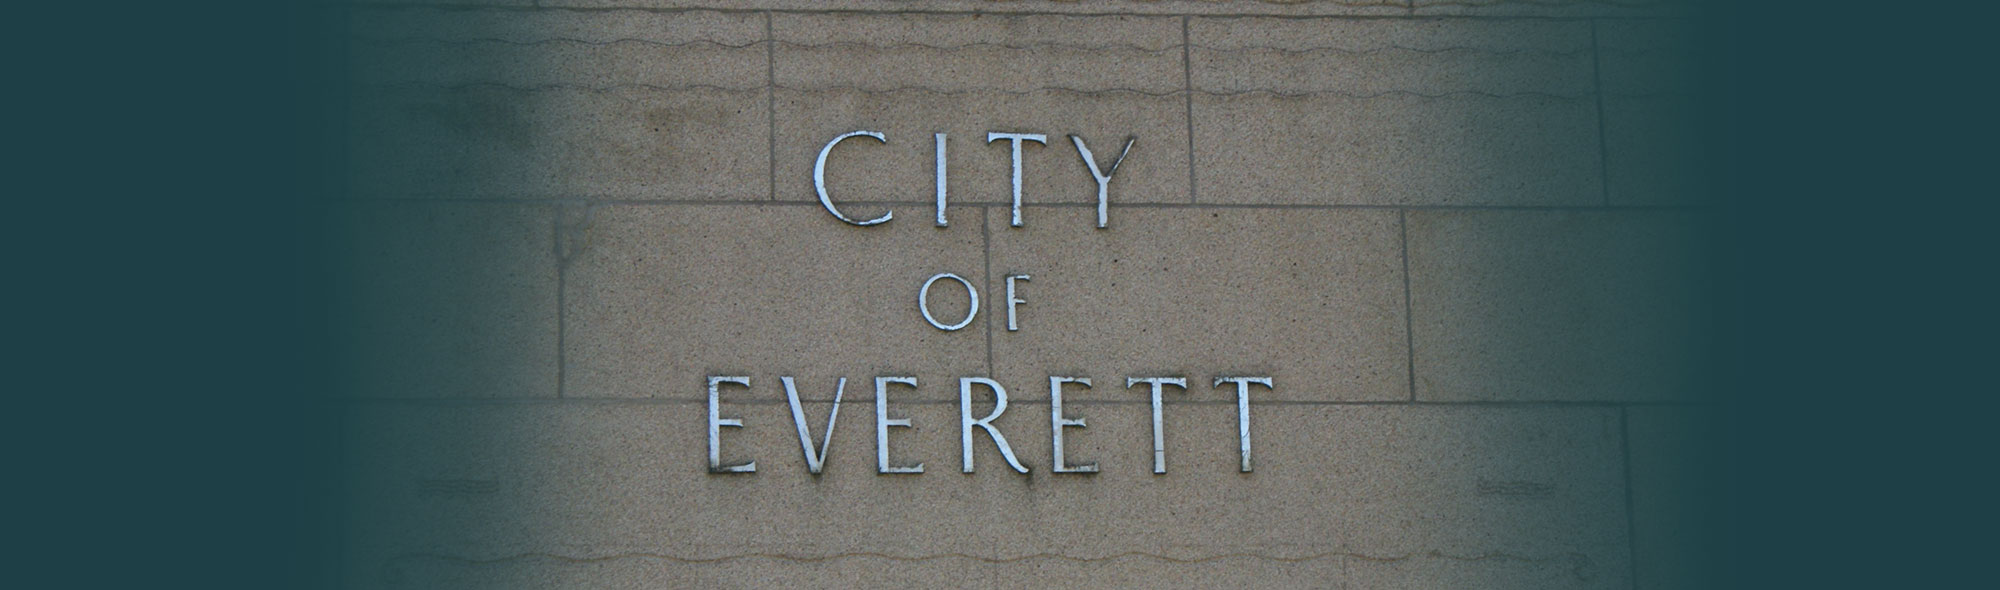 City of Everett Sign